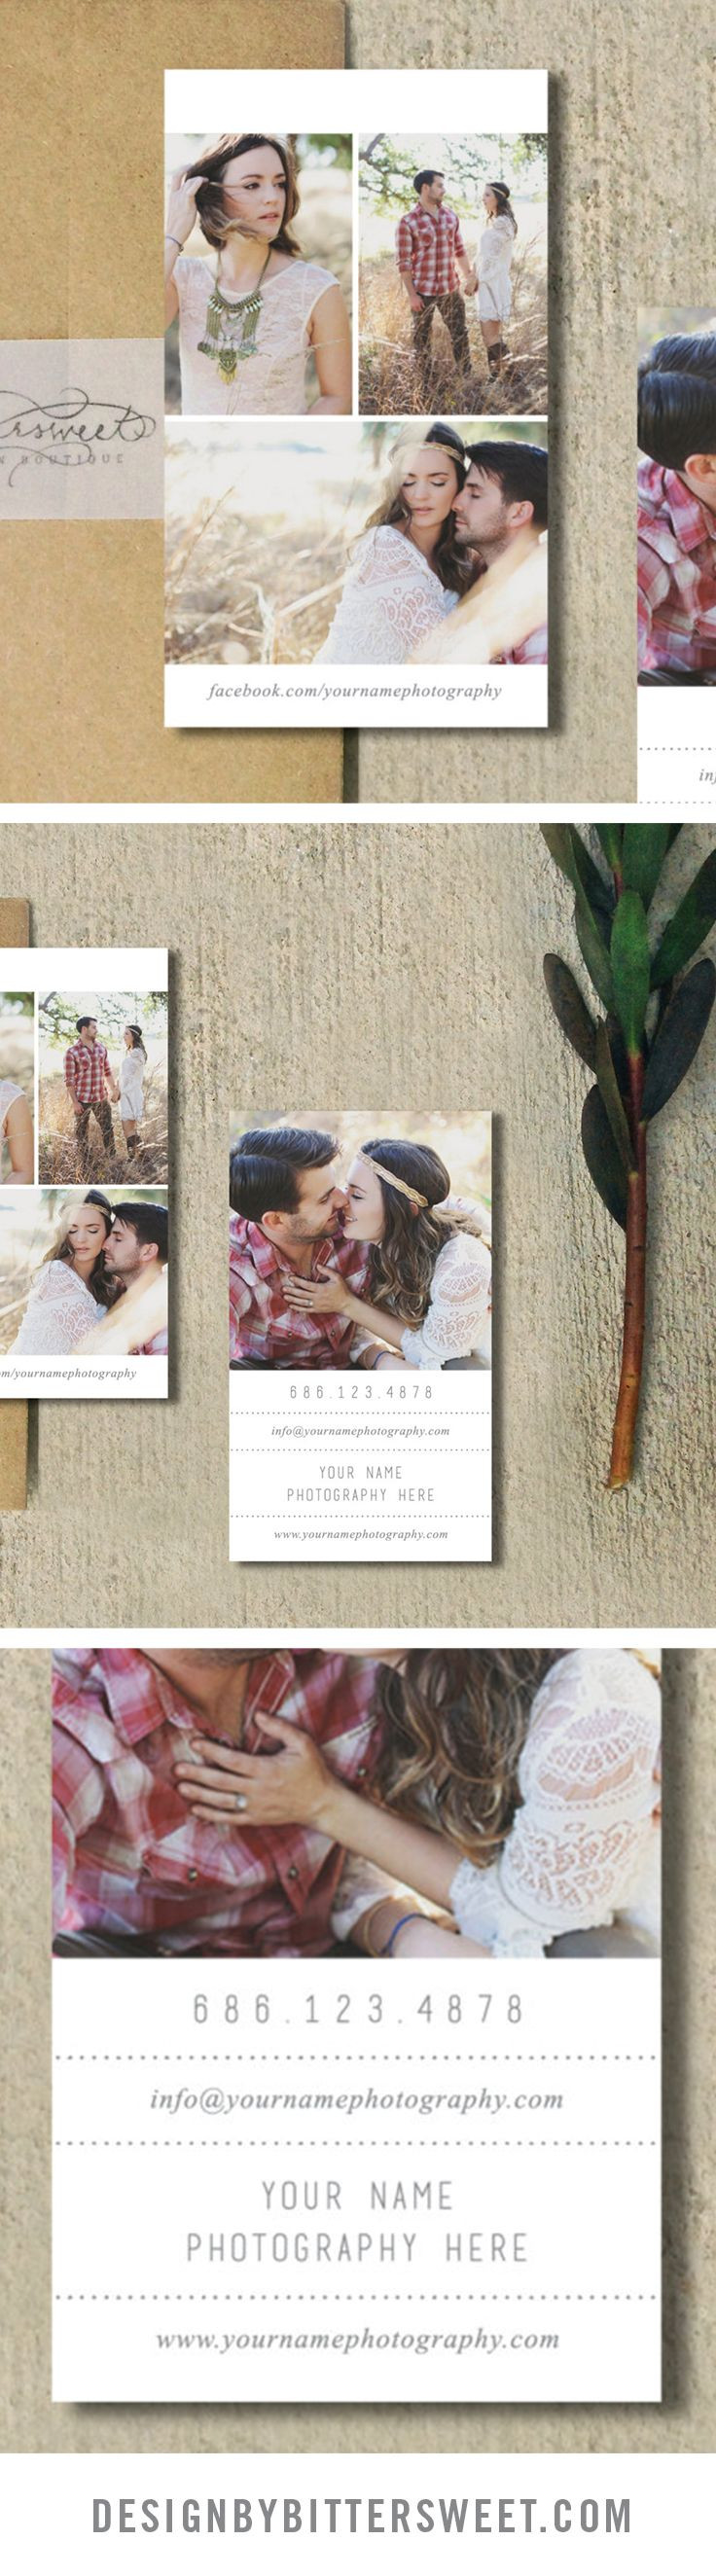 Wedding Photography Business Card Business Card Template Of Photographer Business Card Template Psd